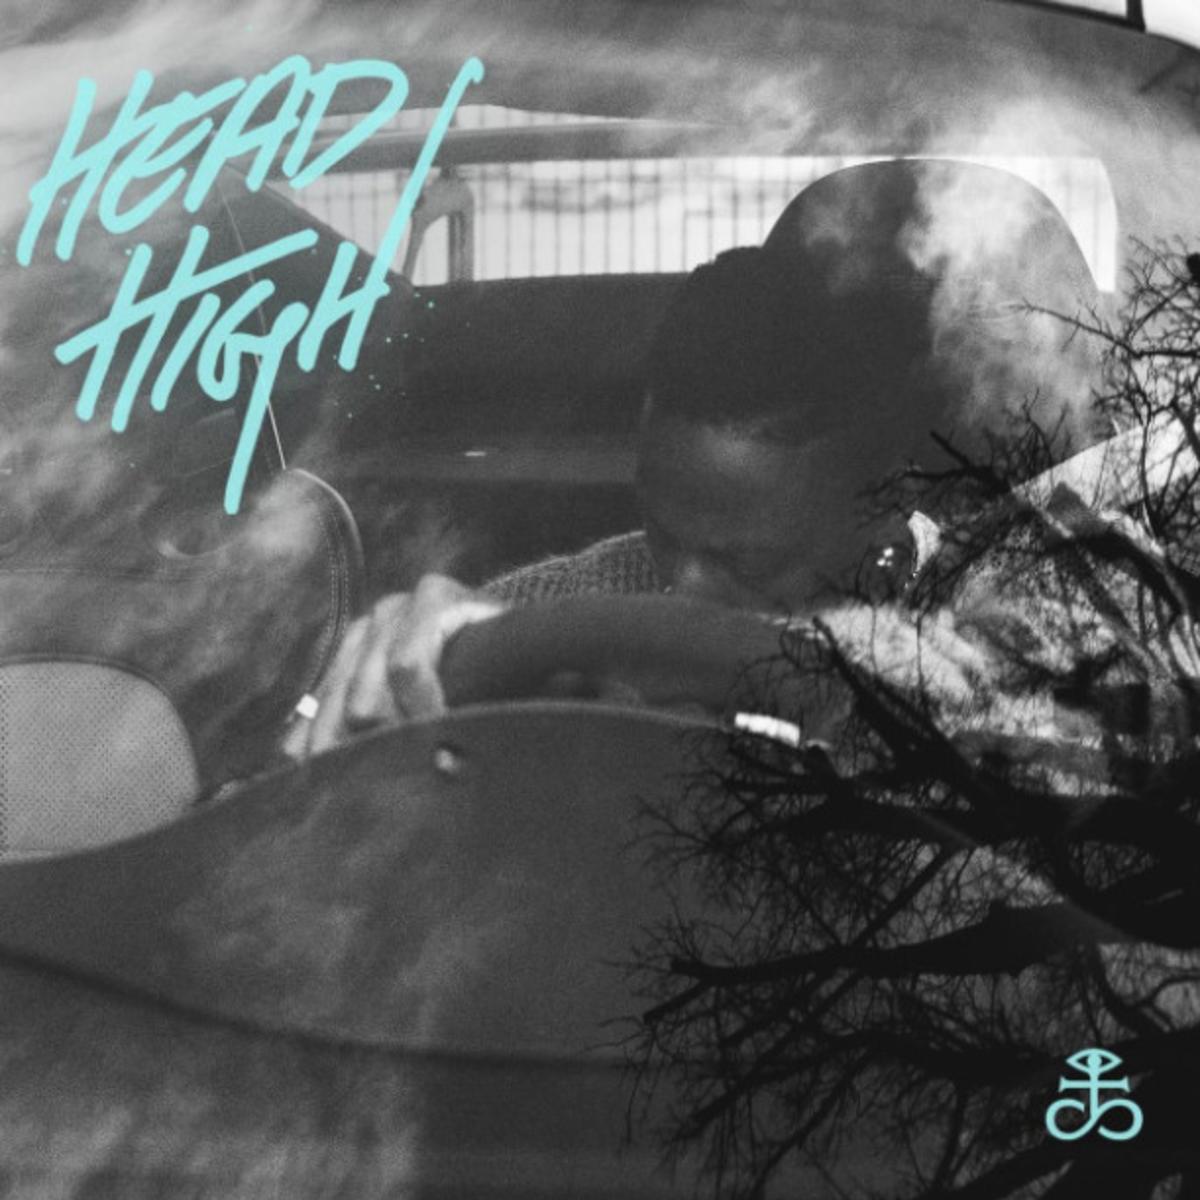 Joey Bada$$ Drops His Second Single Of The Year, “Head High”